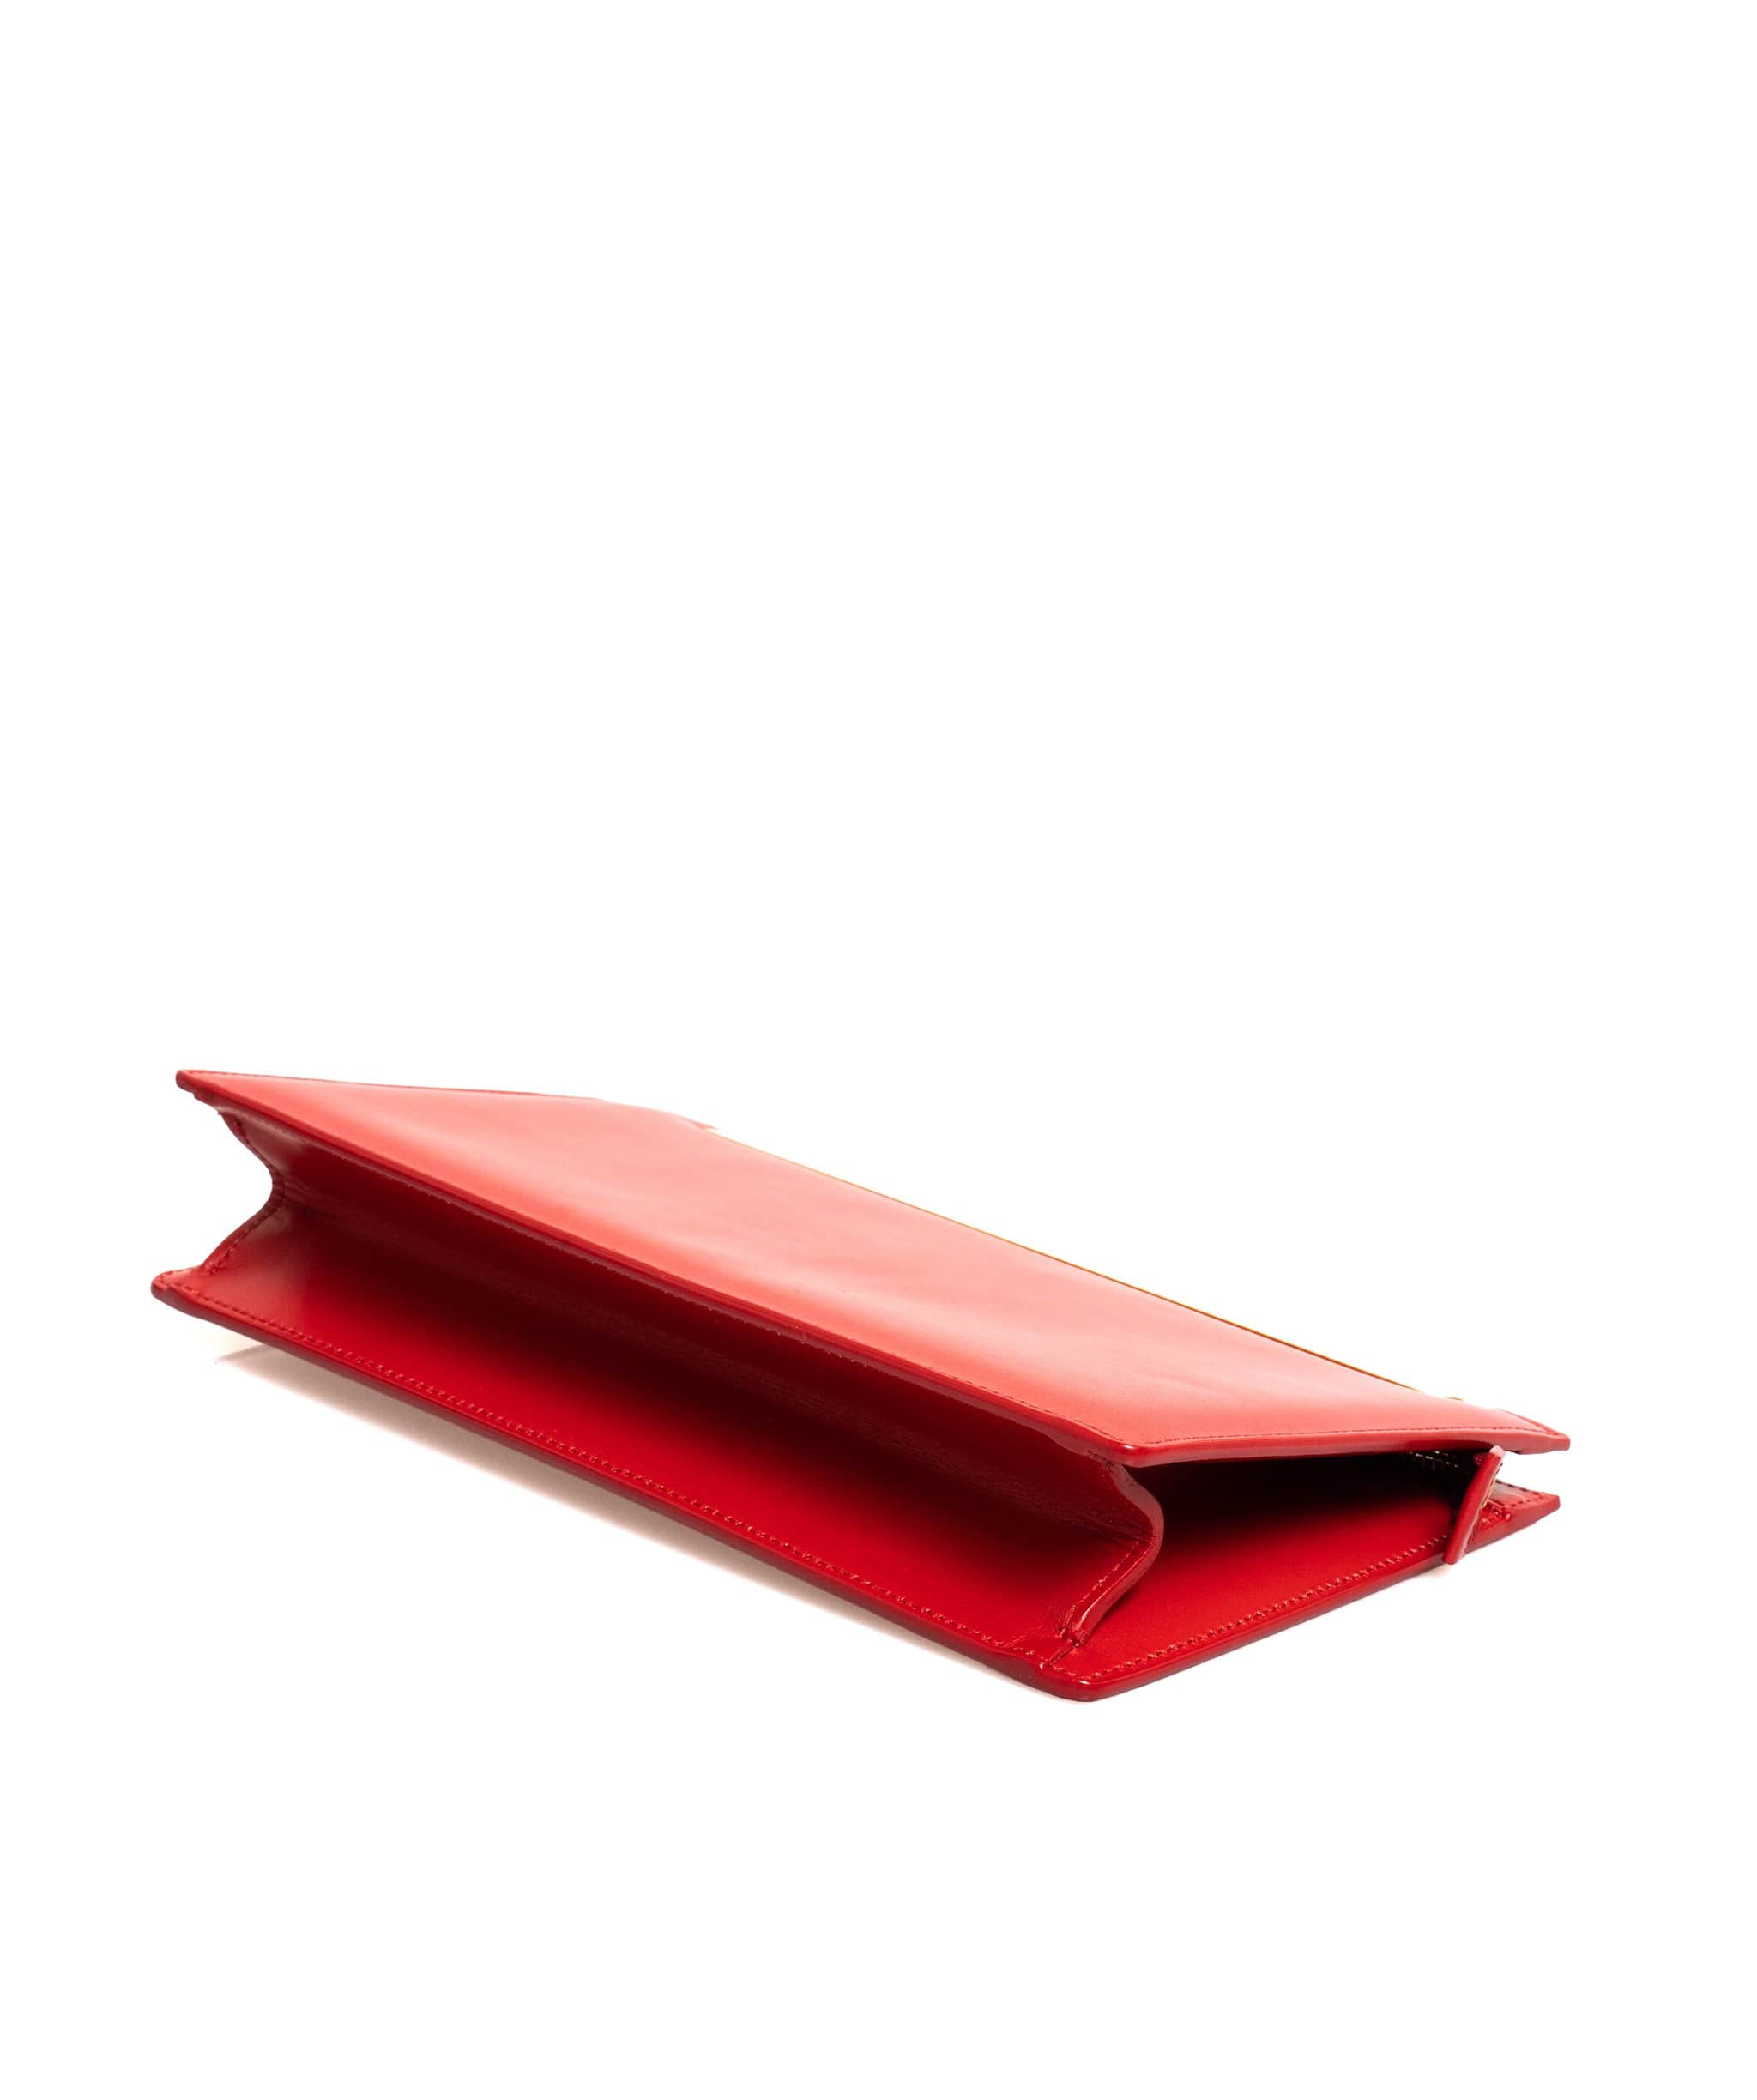 Yves Saint Laurent Saint Laurent Red Leather Clutch Bag - AWL2054